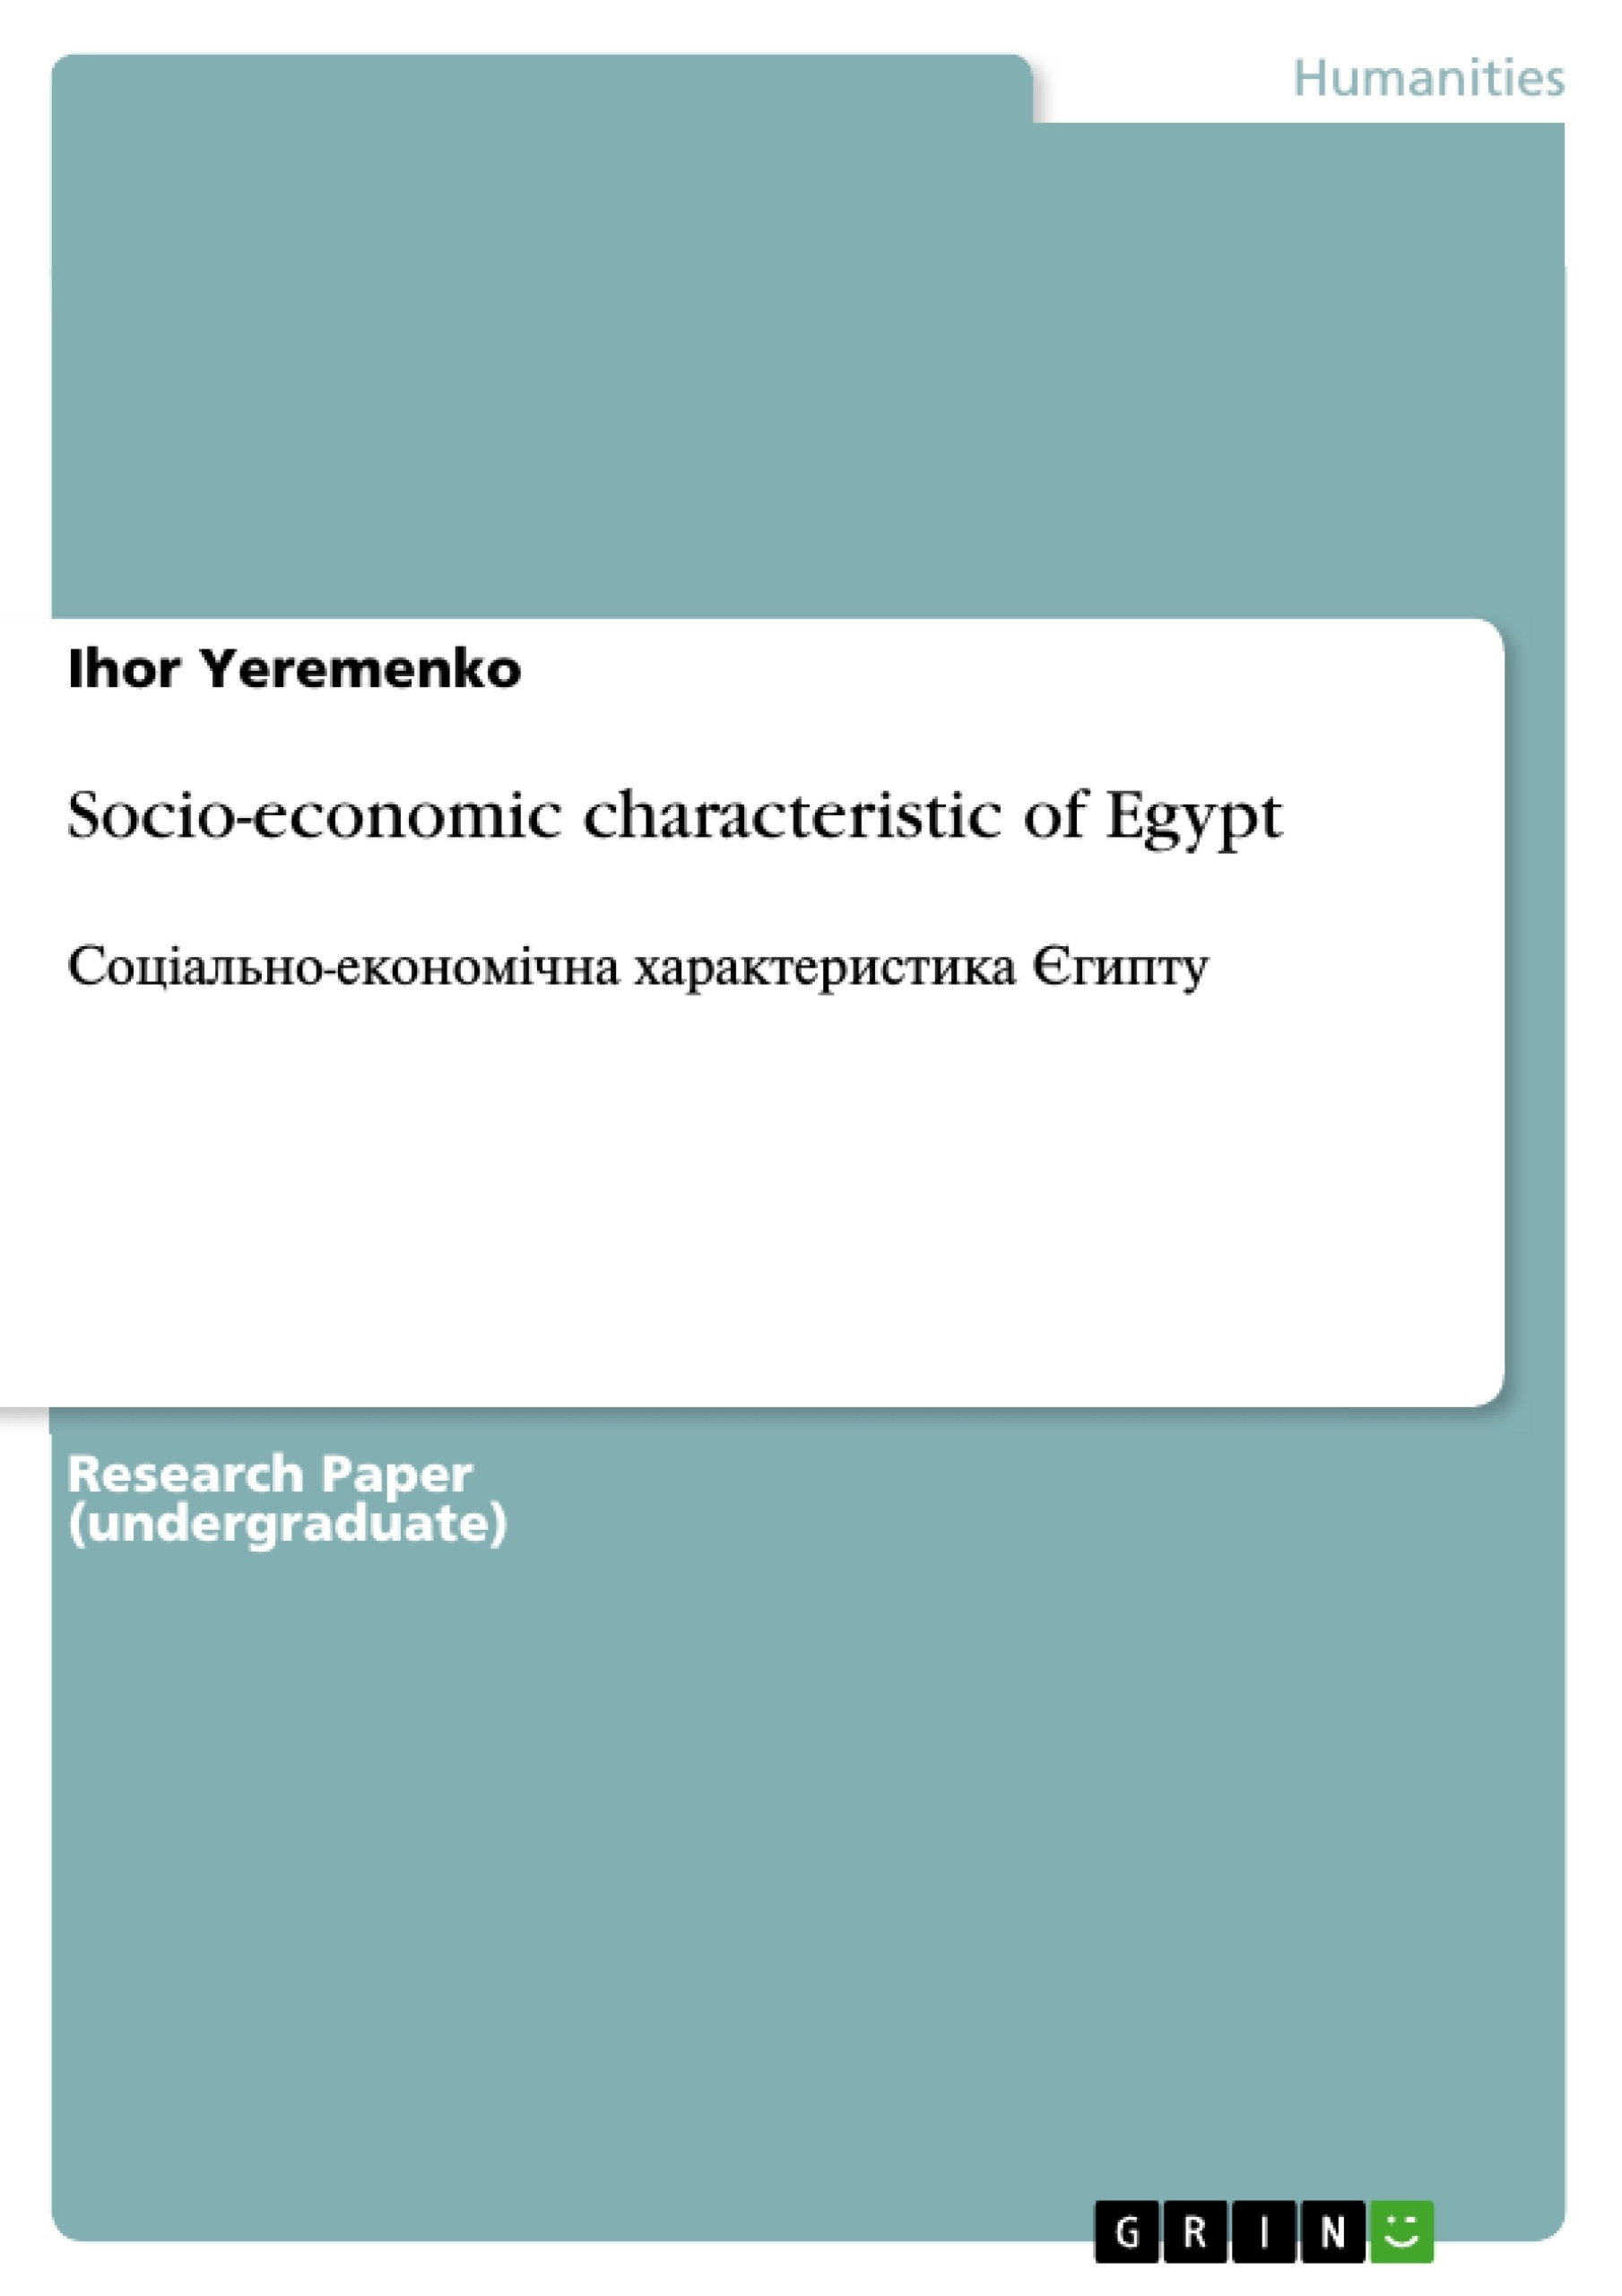 Titre: Socio-economic characteristic of Egypt